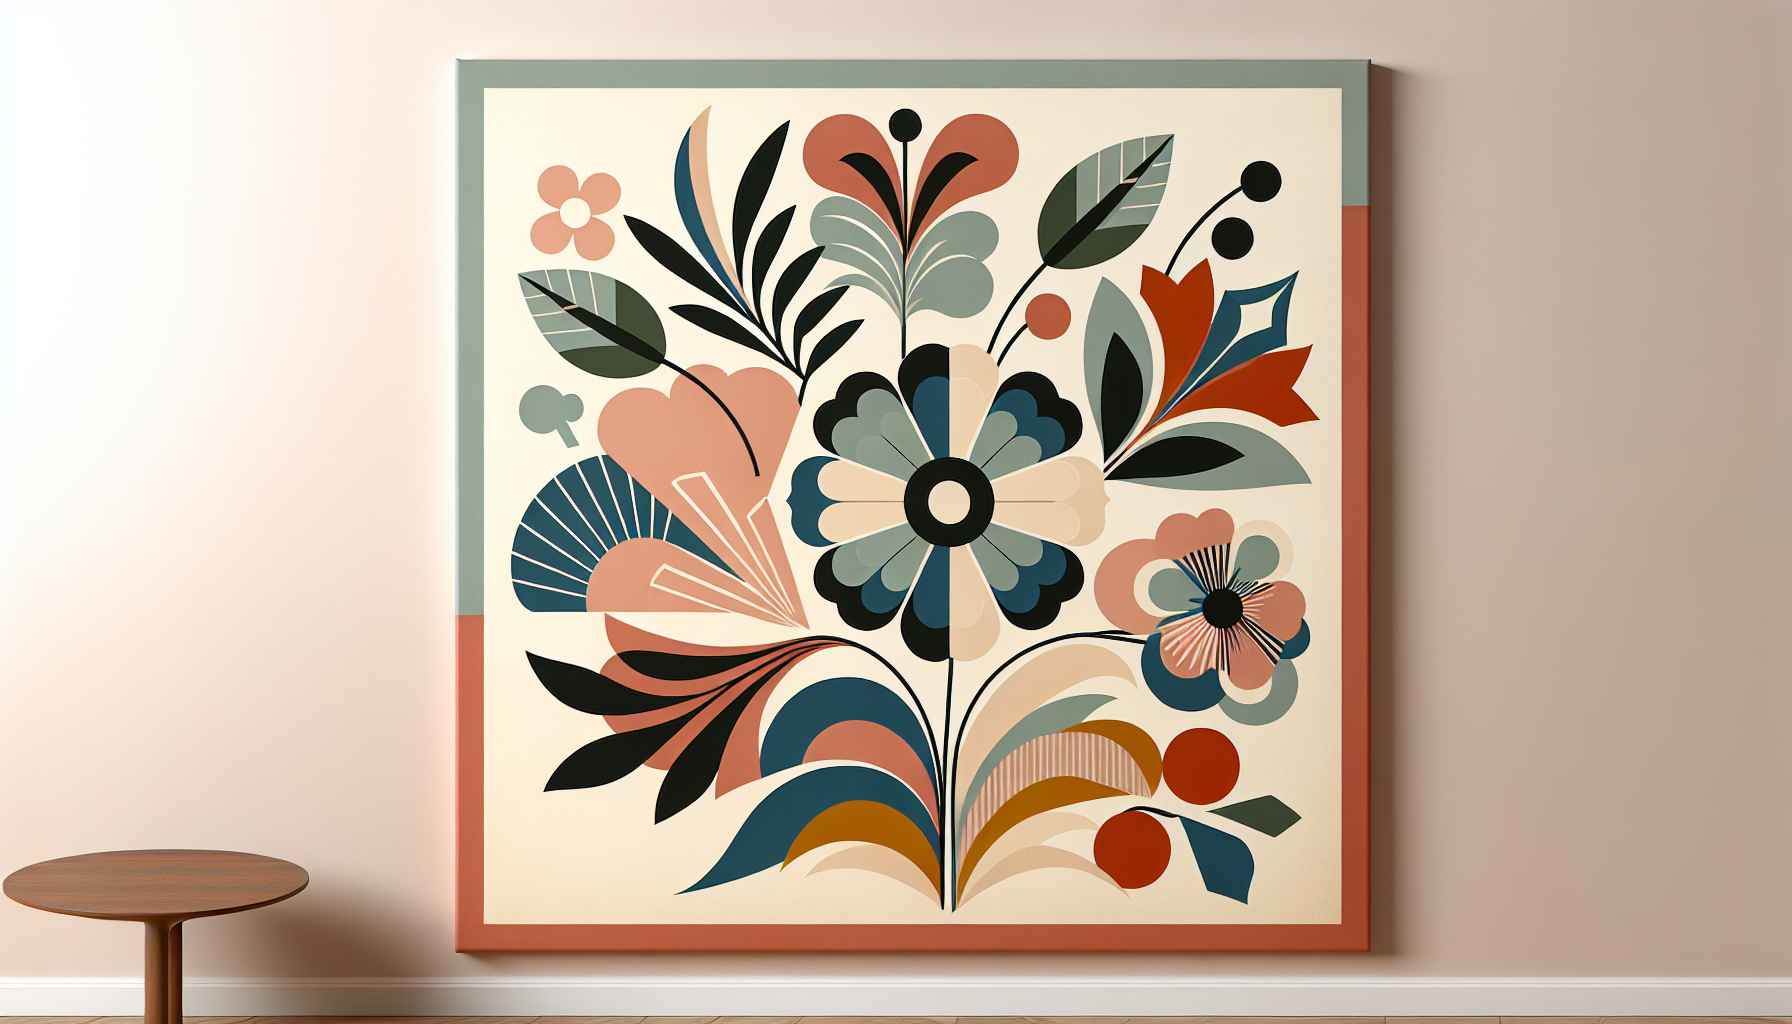 Modern interpretation of classic floral designs in mid-century modern wall art